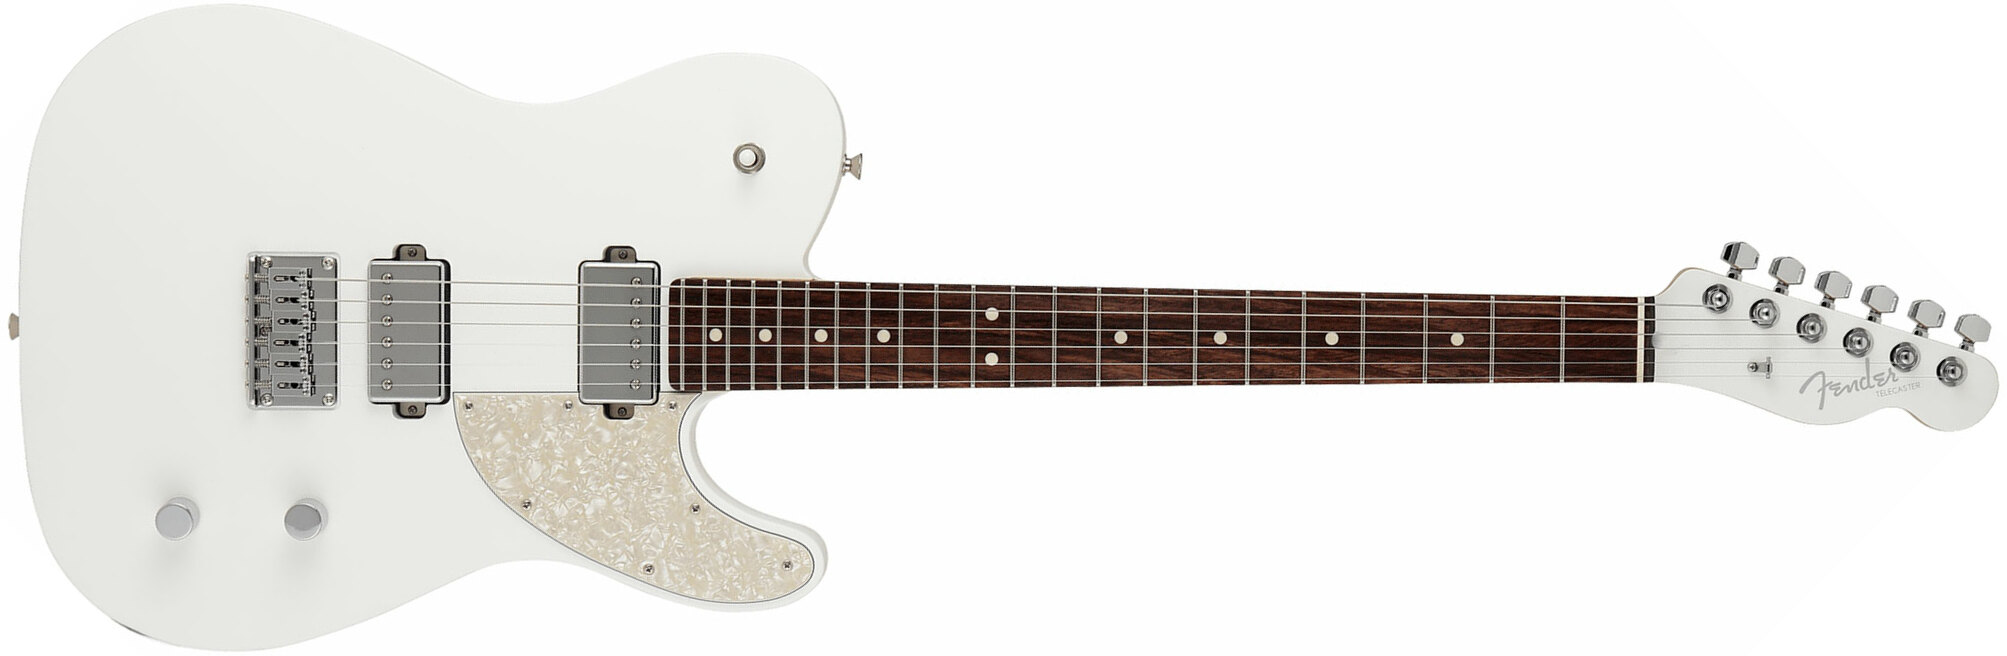 Fender Tele Elemental Mij Jap 2h Ht Rw - Nimbus White - Televorm elektrische gitaar - Main picture